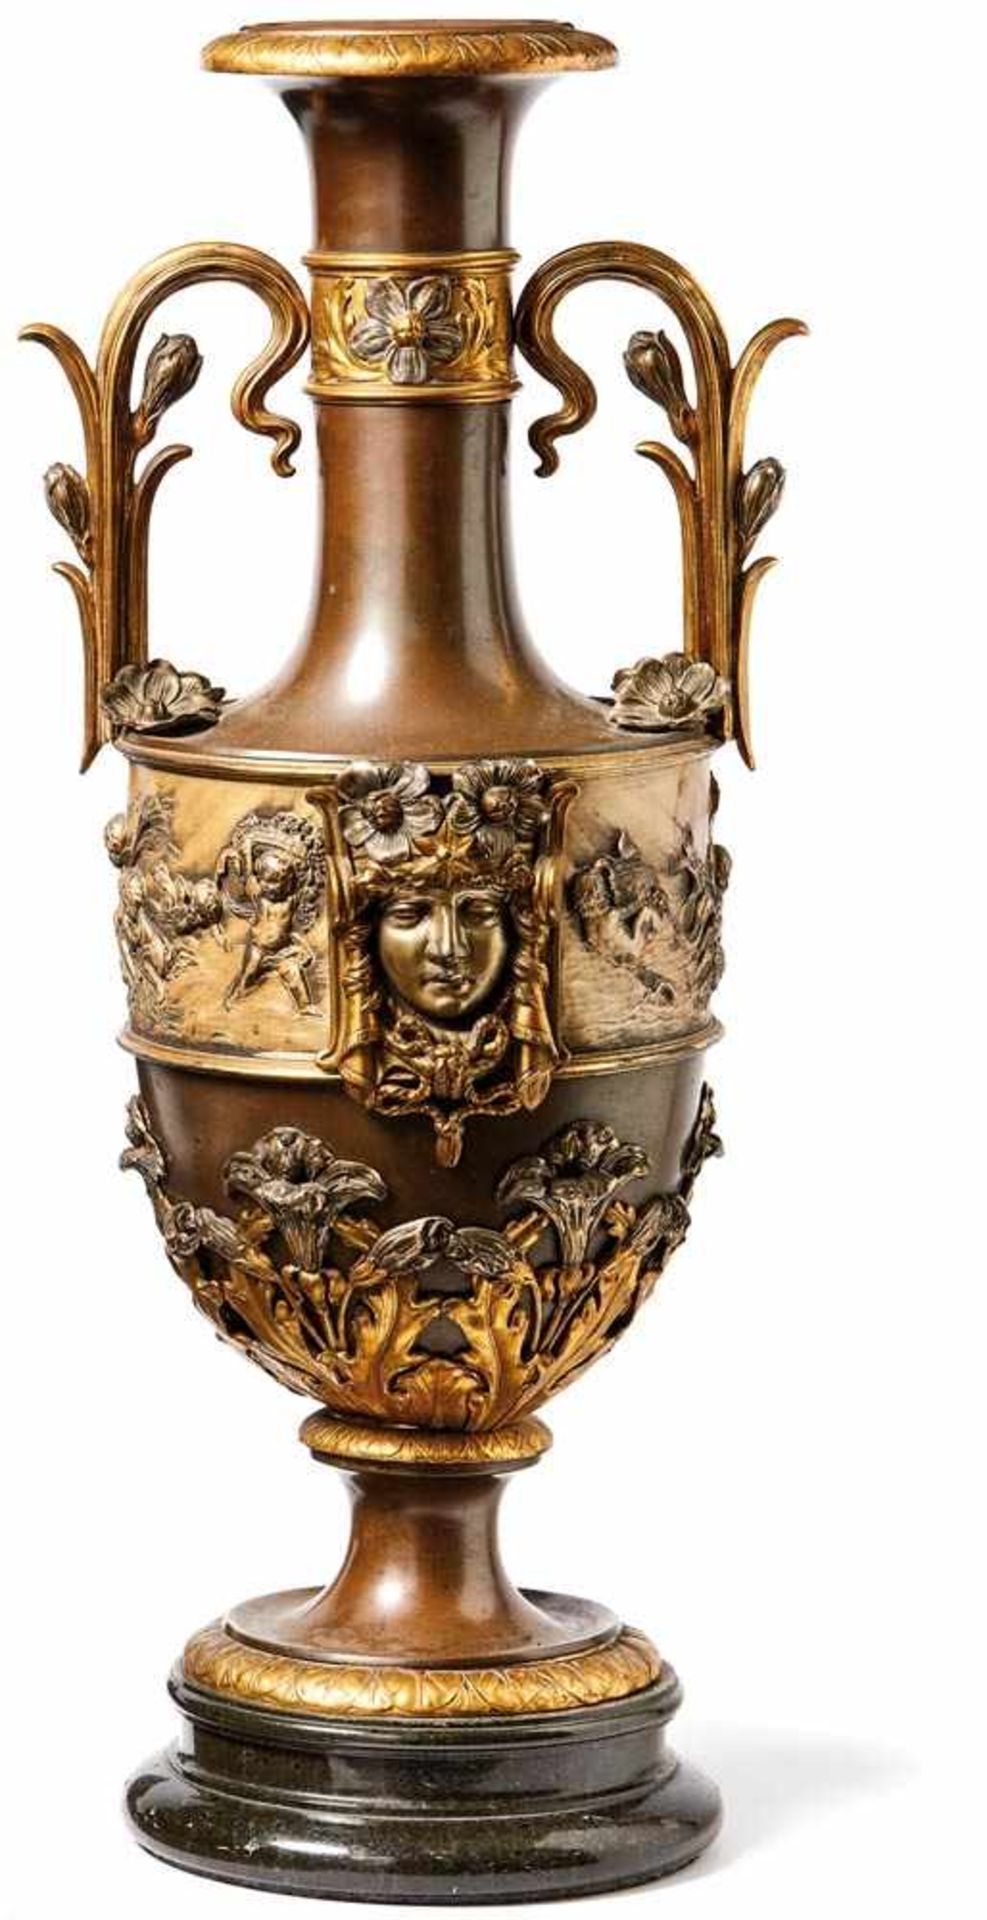 Moreau, Auguste - attributed toLarge decorative vase(Paris 1834-1917) A slender amphora vase with